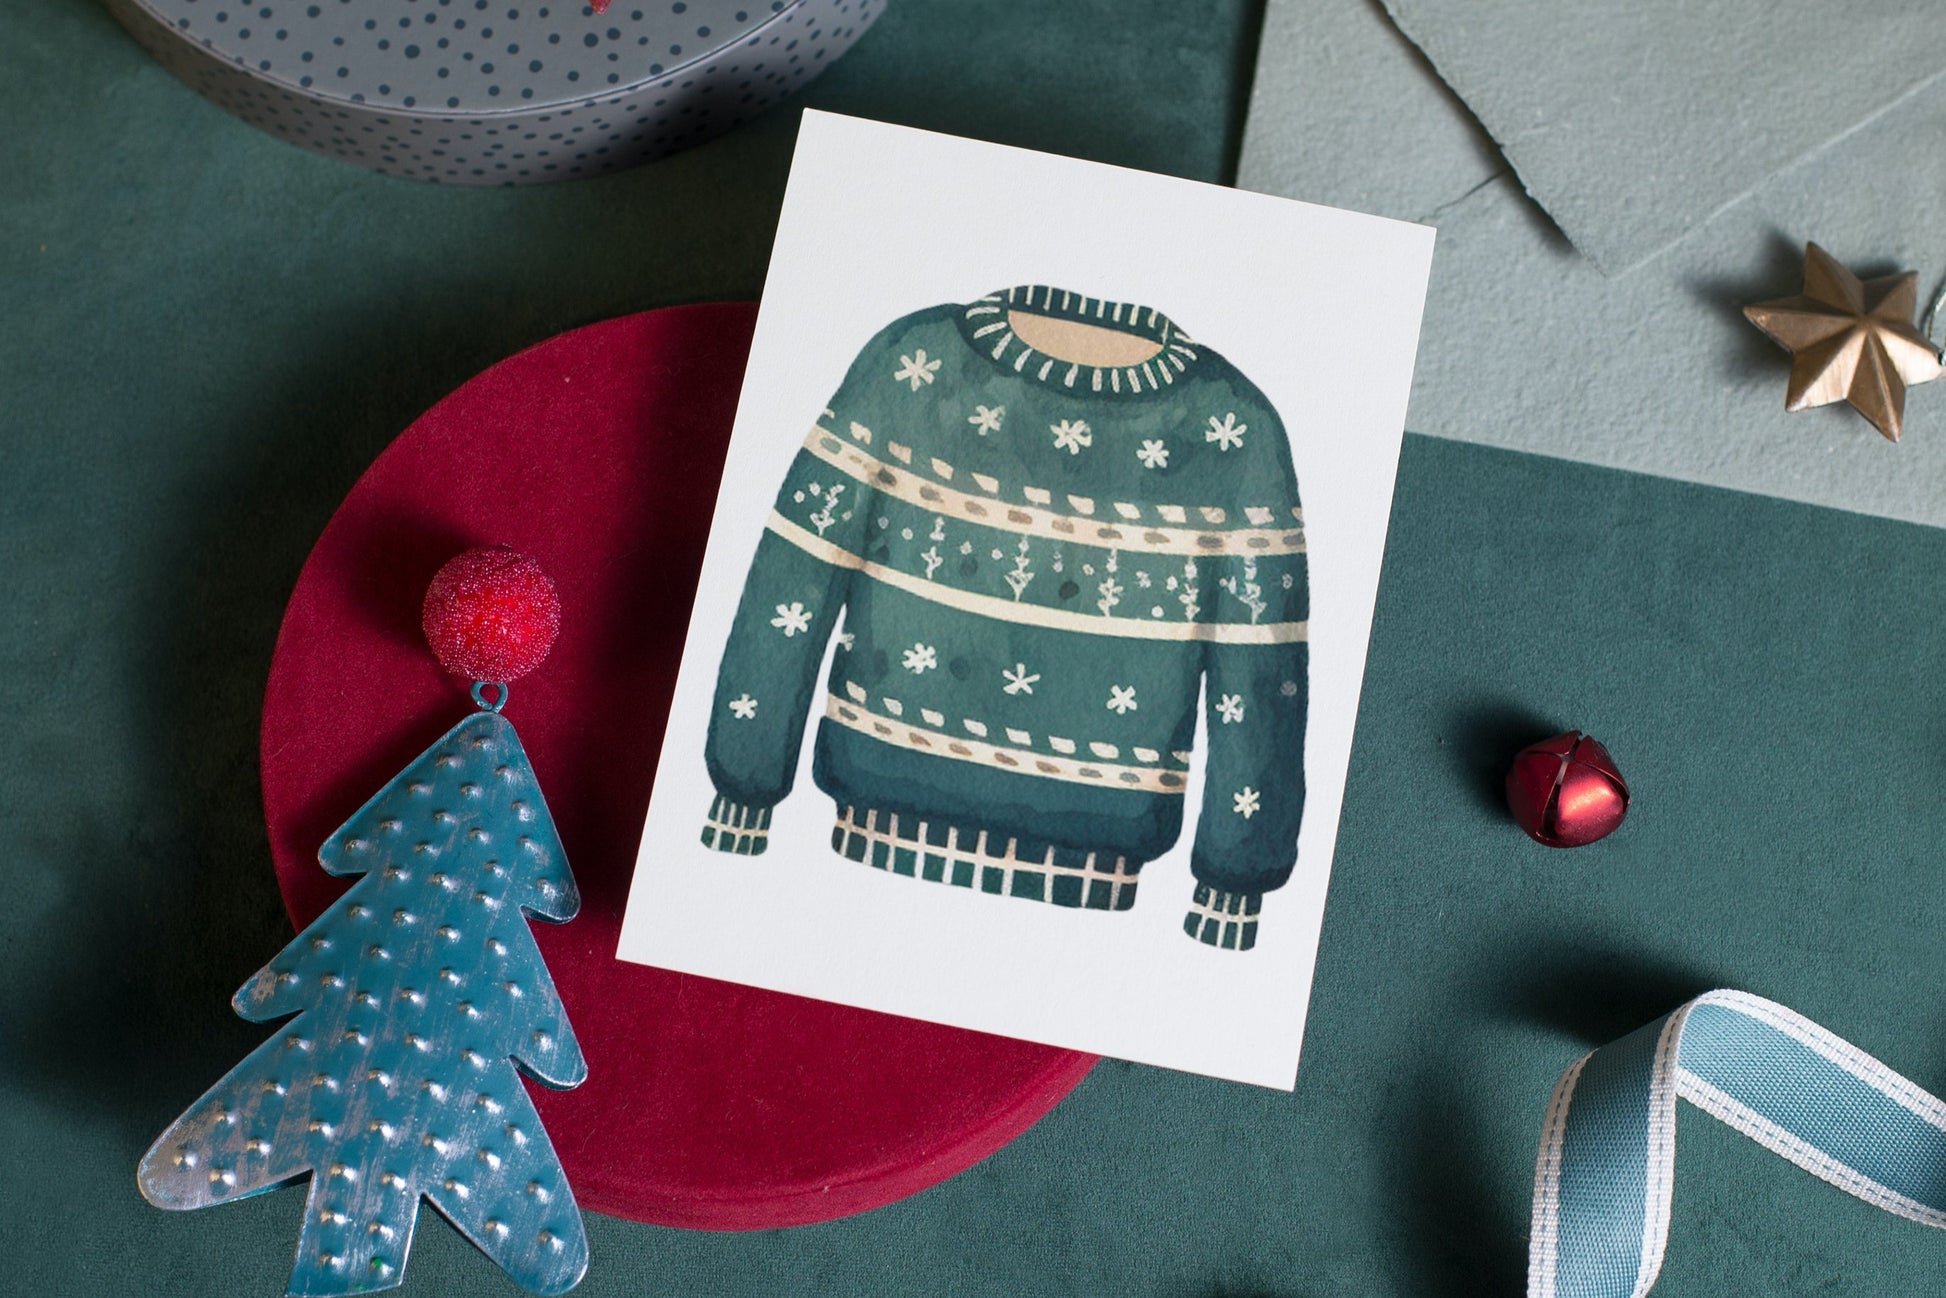 Christmas Ugly Sweater PNG Cliparts - Digital Artwork - Mama Life Printables